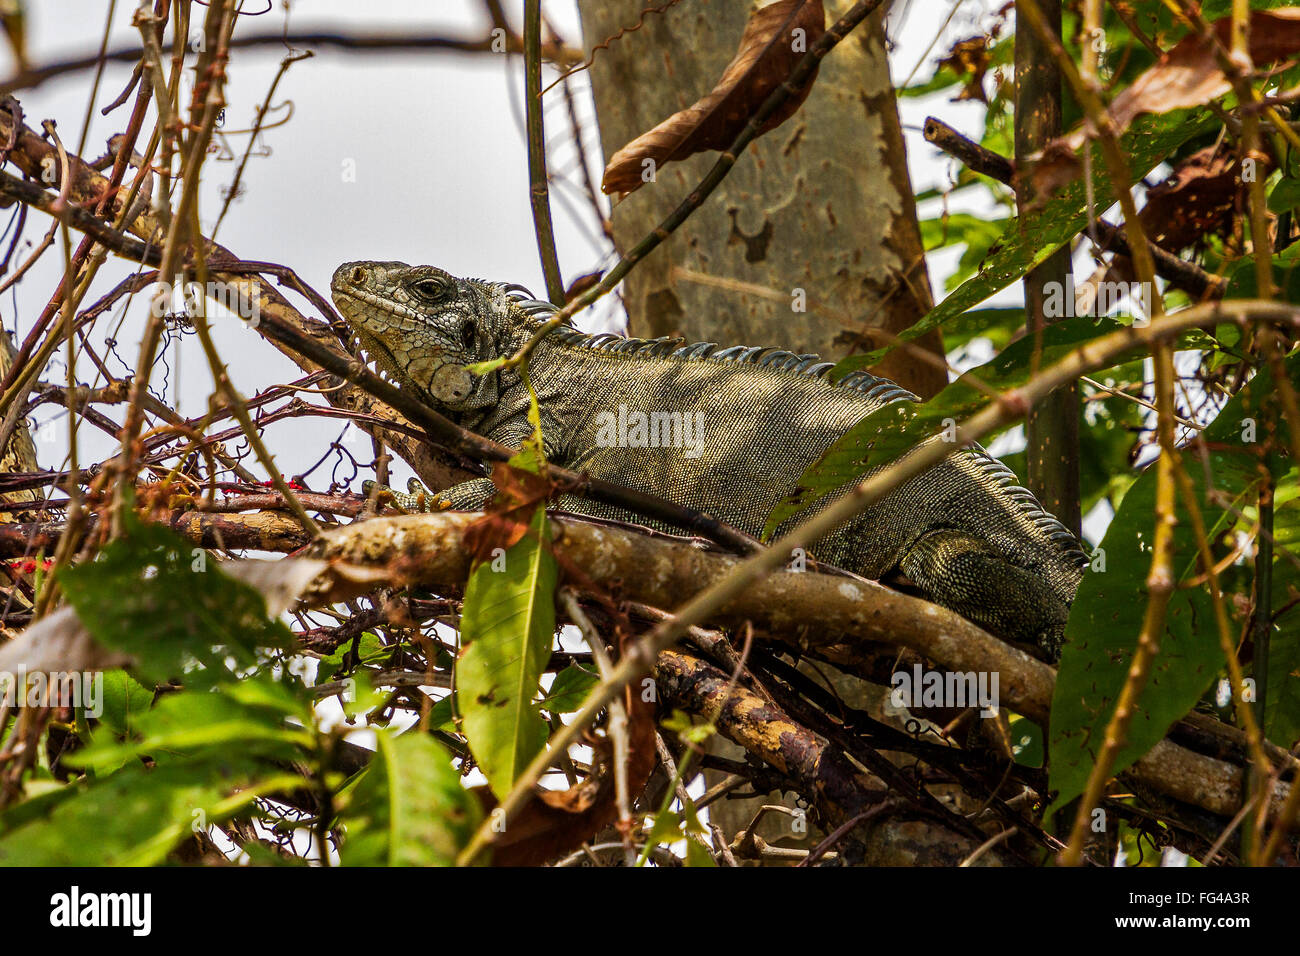 Leguan squamate Reptil Jagd In die Baumkronen Santarem, Brasilien Stockfoto